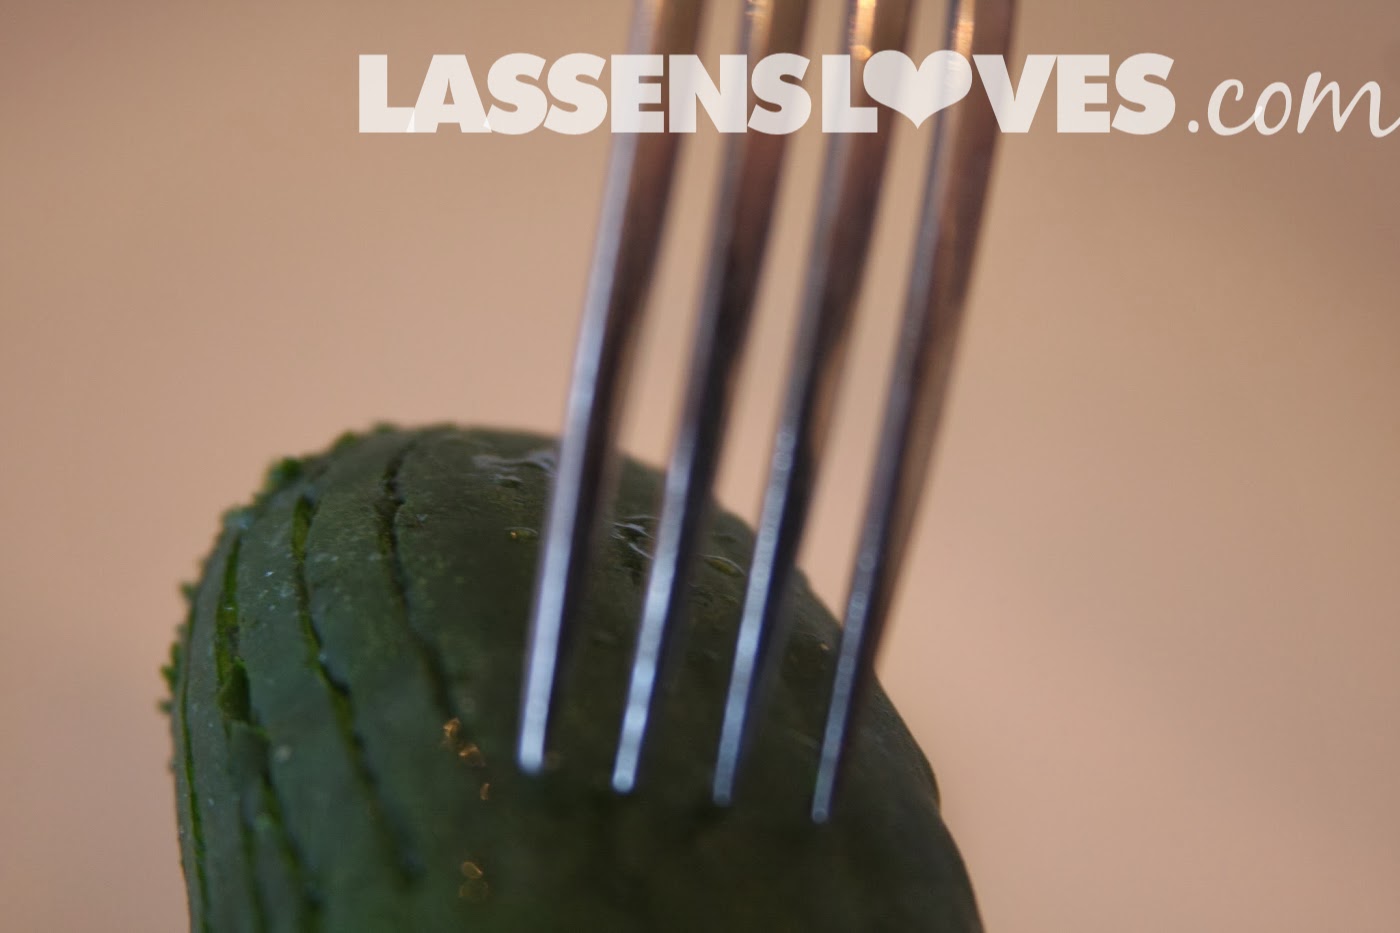 lassensloves.com, Lassen's, Lassens, Summer+drinks, Rosemary+cucumber+limeade